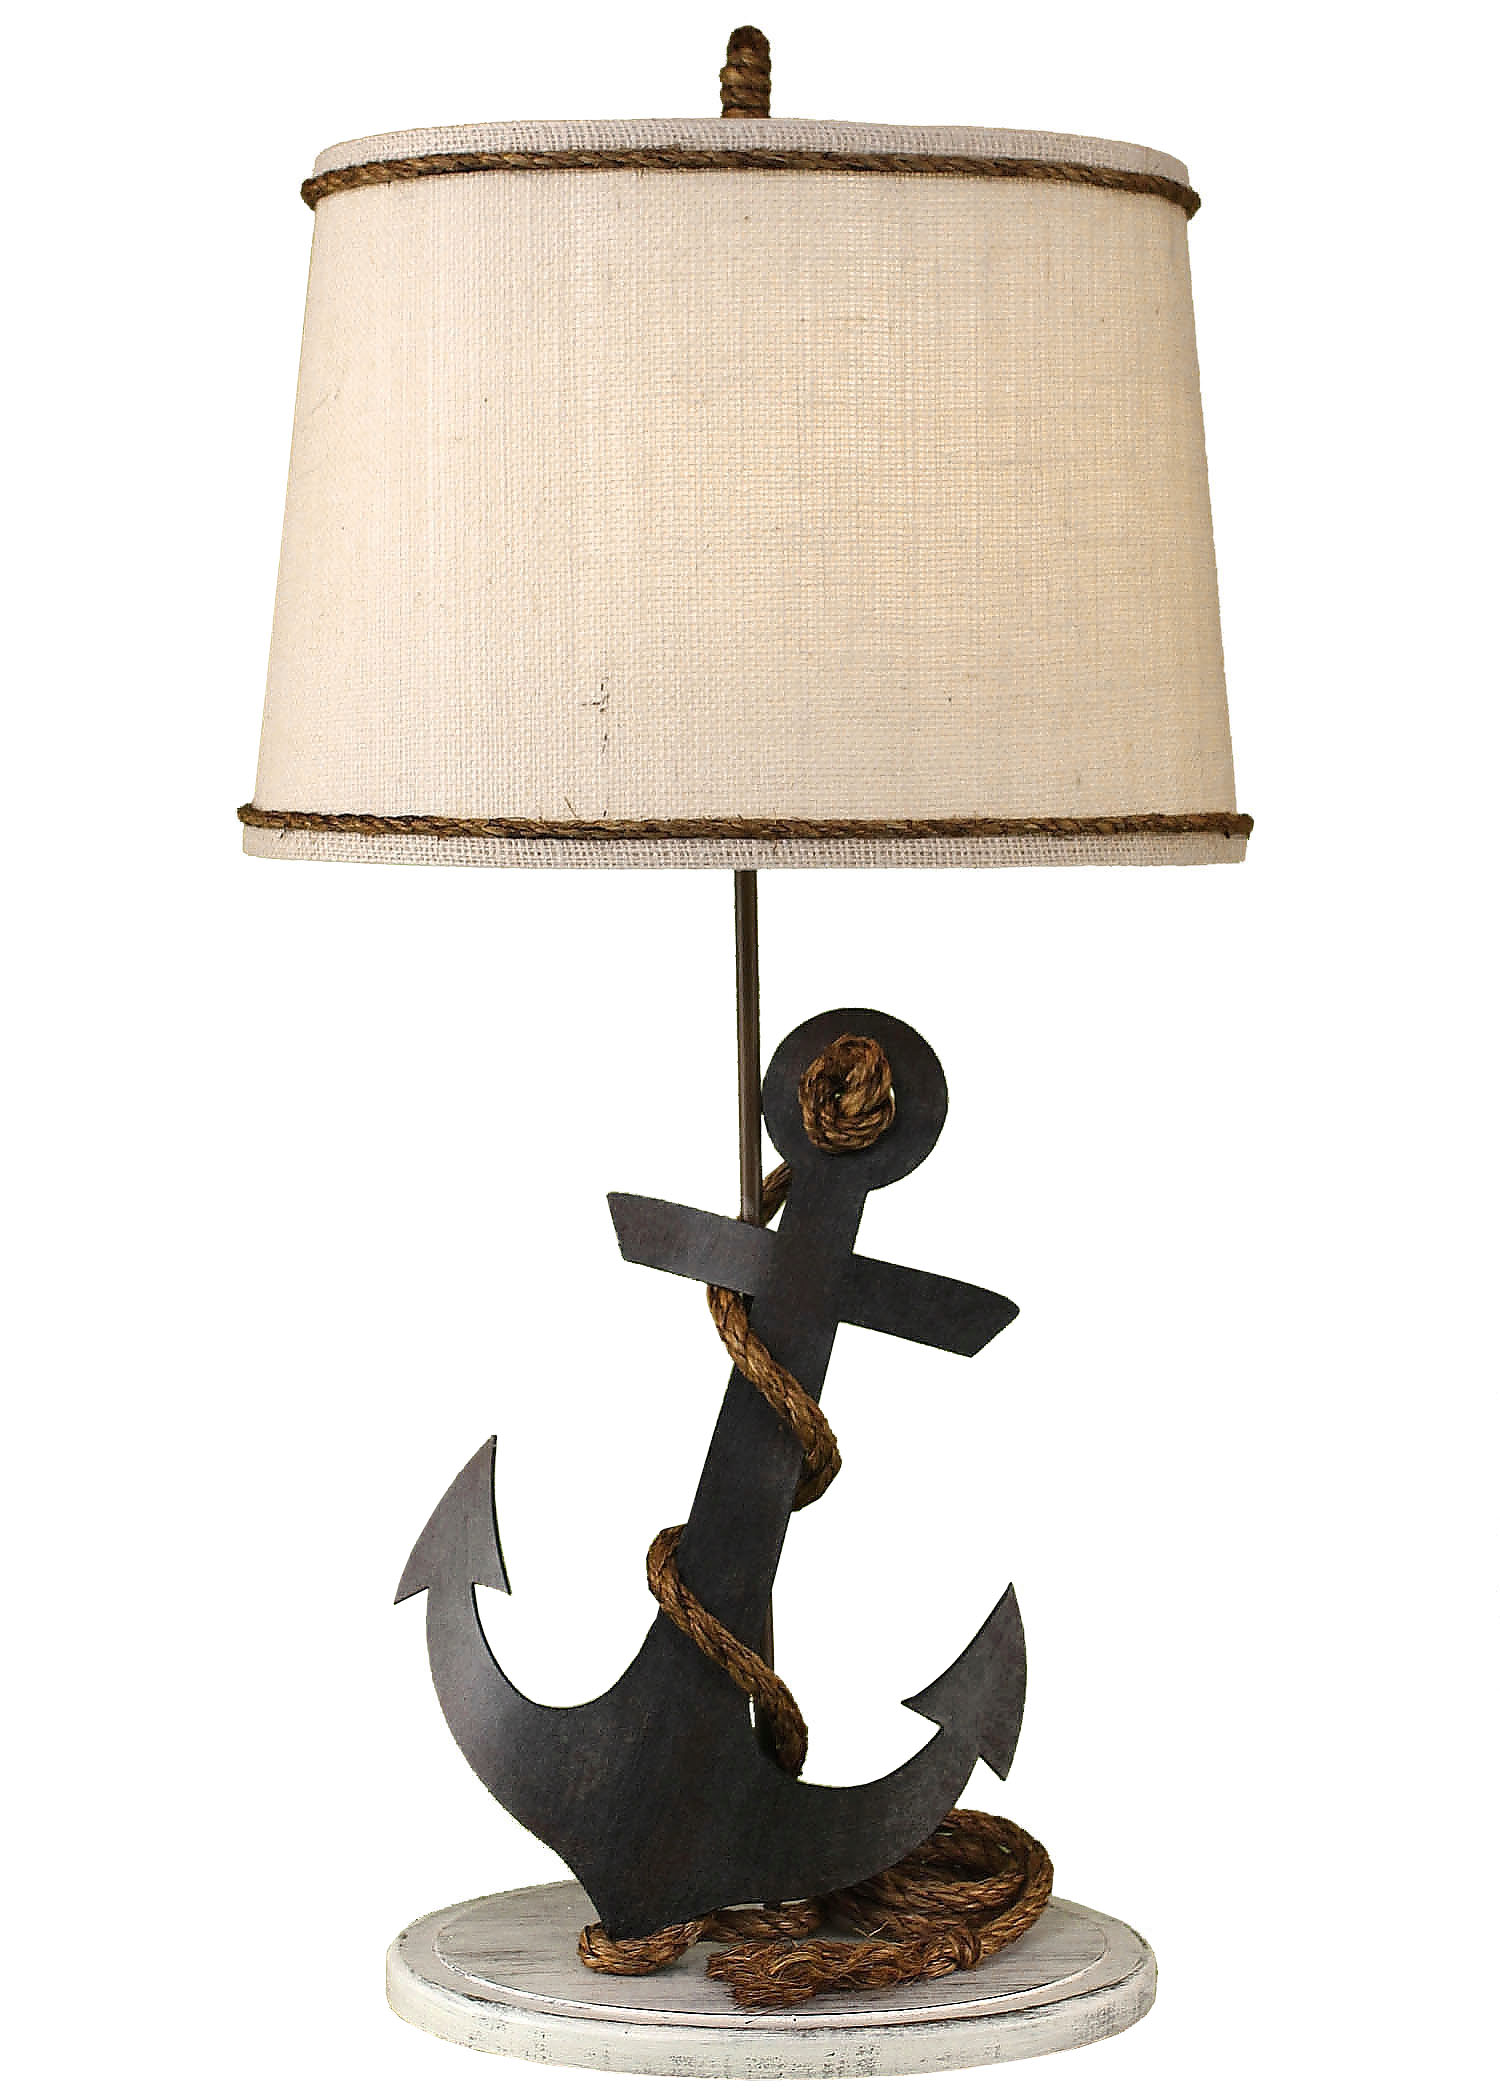 Nautical Table Lamp